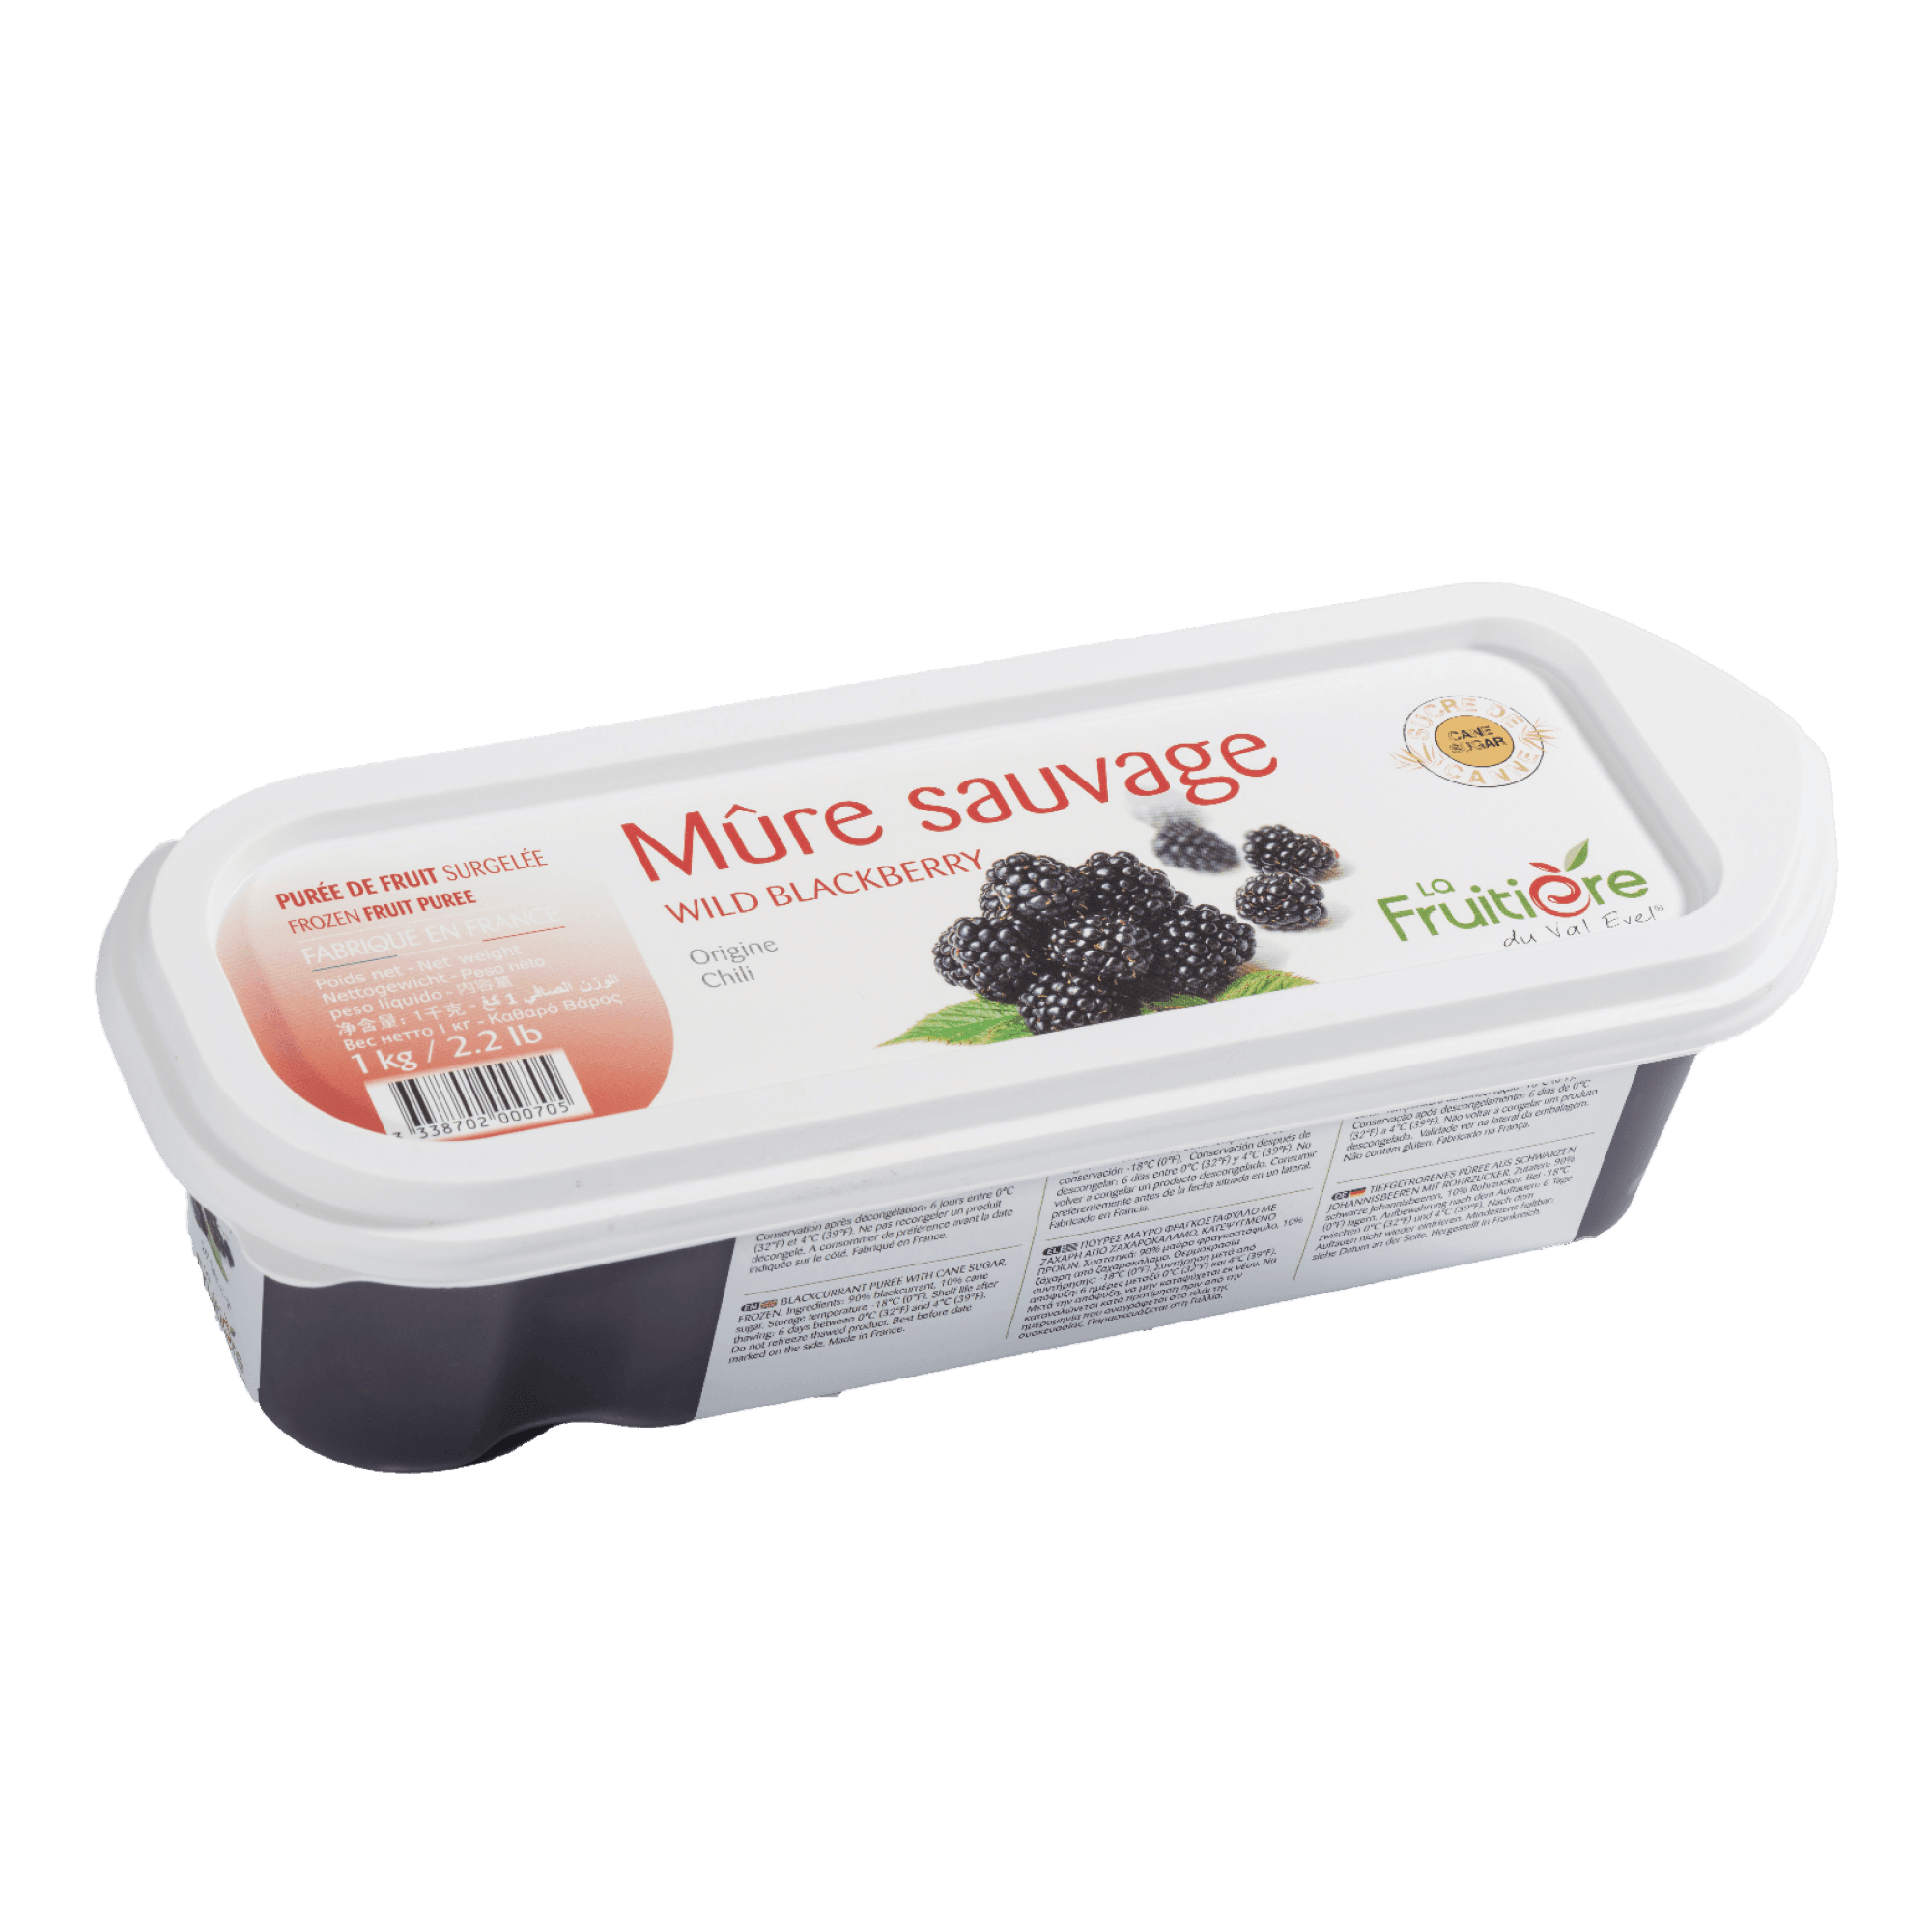 Wild Blackberry Purée - Savory Gourmet